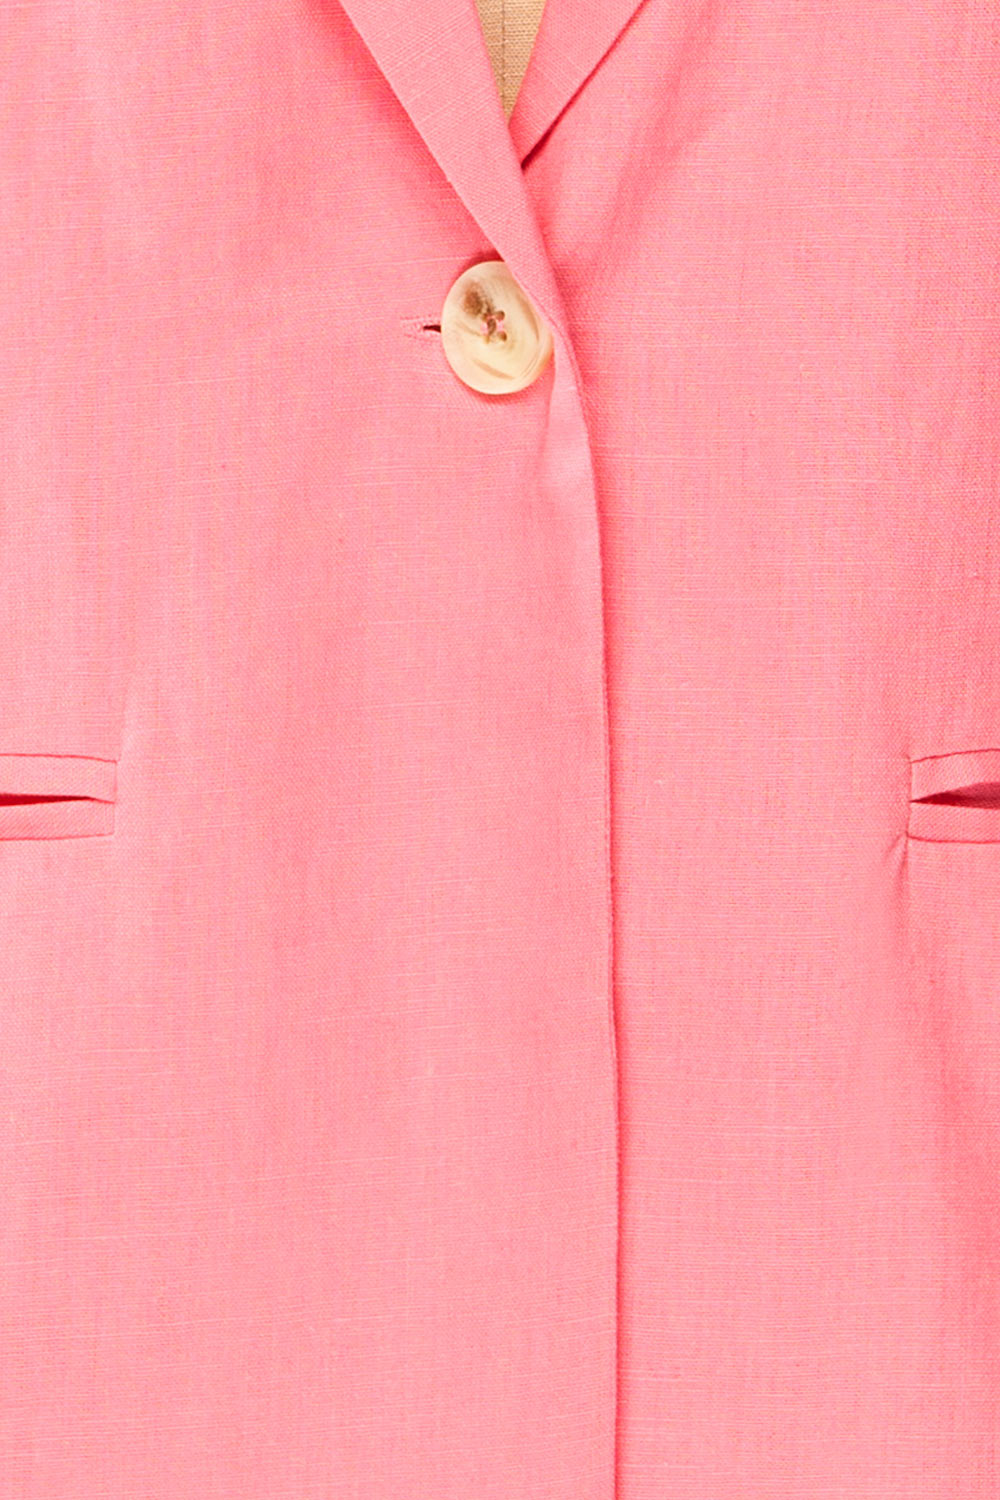 Sucunduri Pink Light Linen Blazer | La petite garçonne fabric 